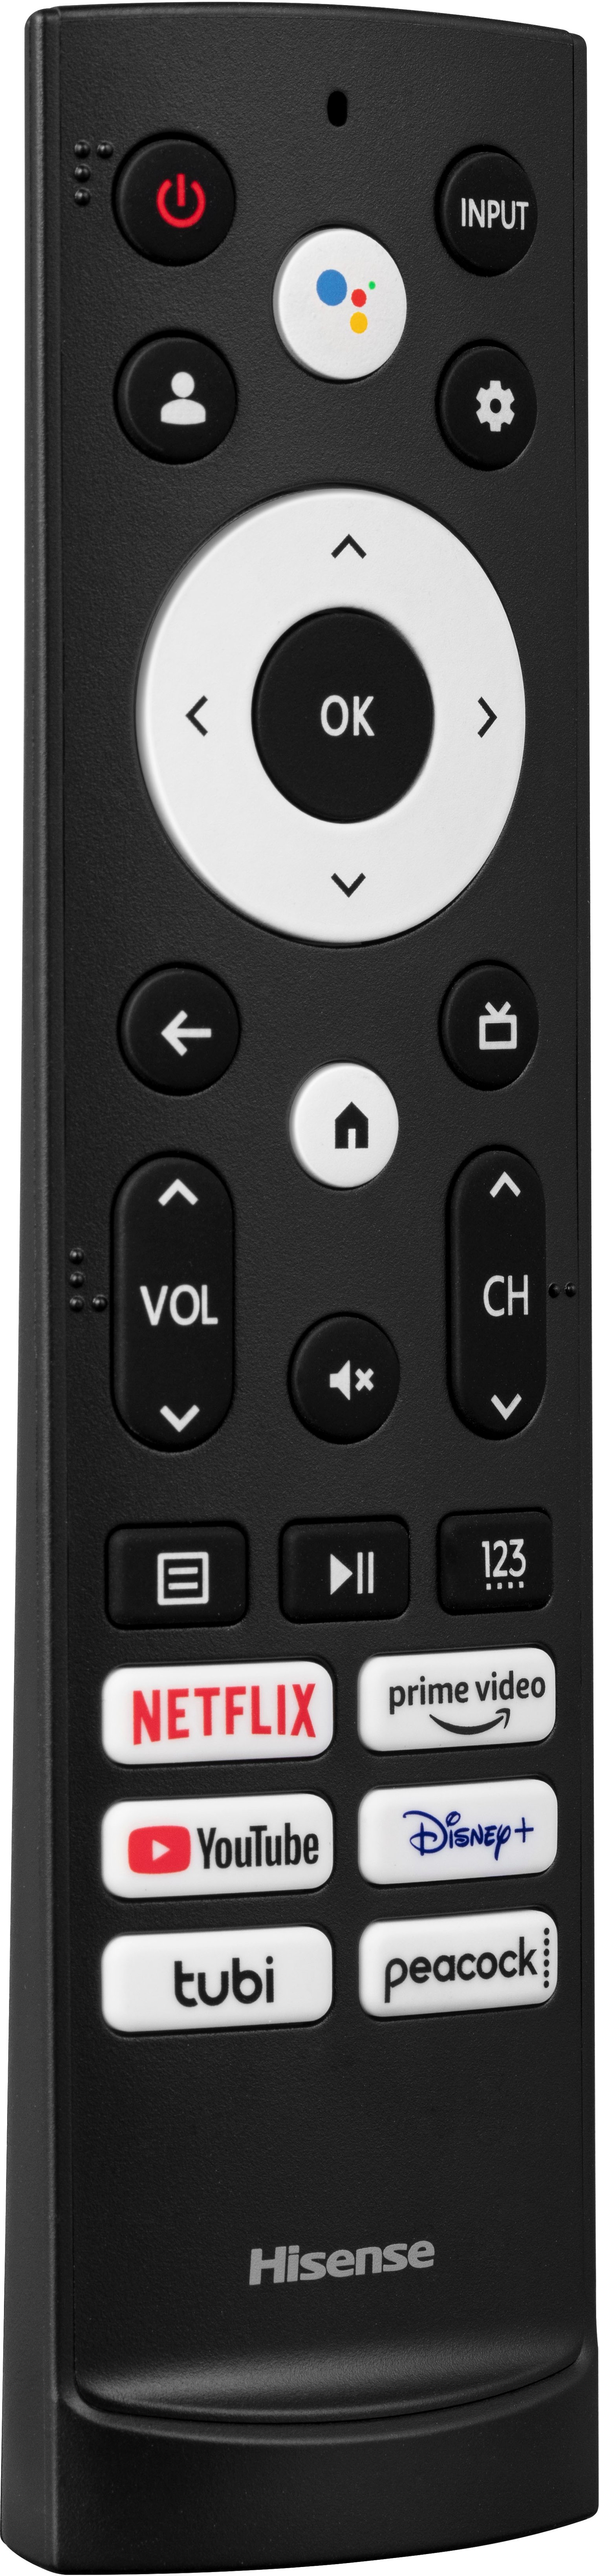 Hisense ULED Premium U7H QLED Series 85-inch Class Quantum Dot Google 4K  Smart TV (85U7H, 2022 Model),Black